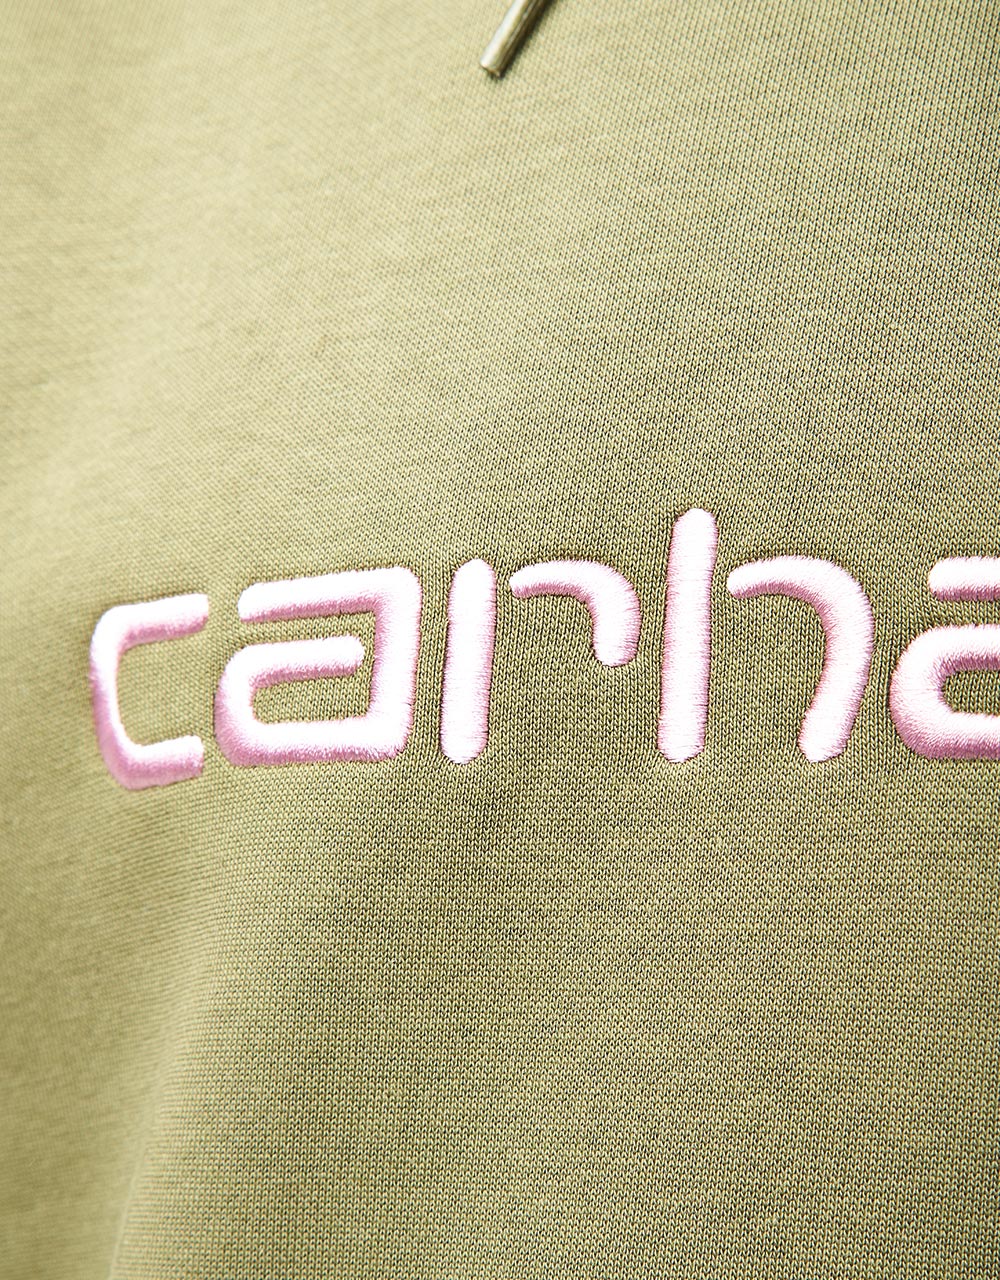 Carhartt WIP Hooded Carhartt Sweatshirt - Dundee/Glassy Pink